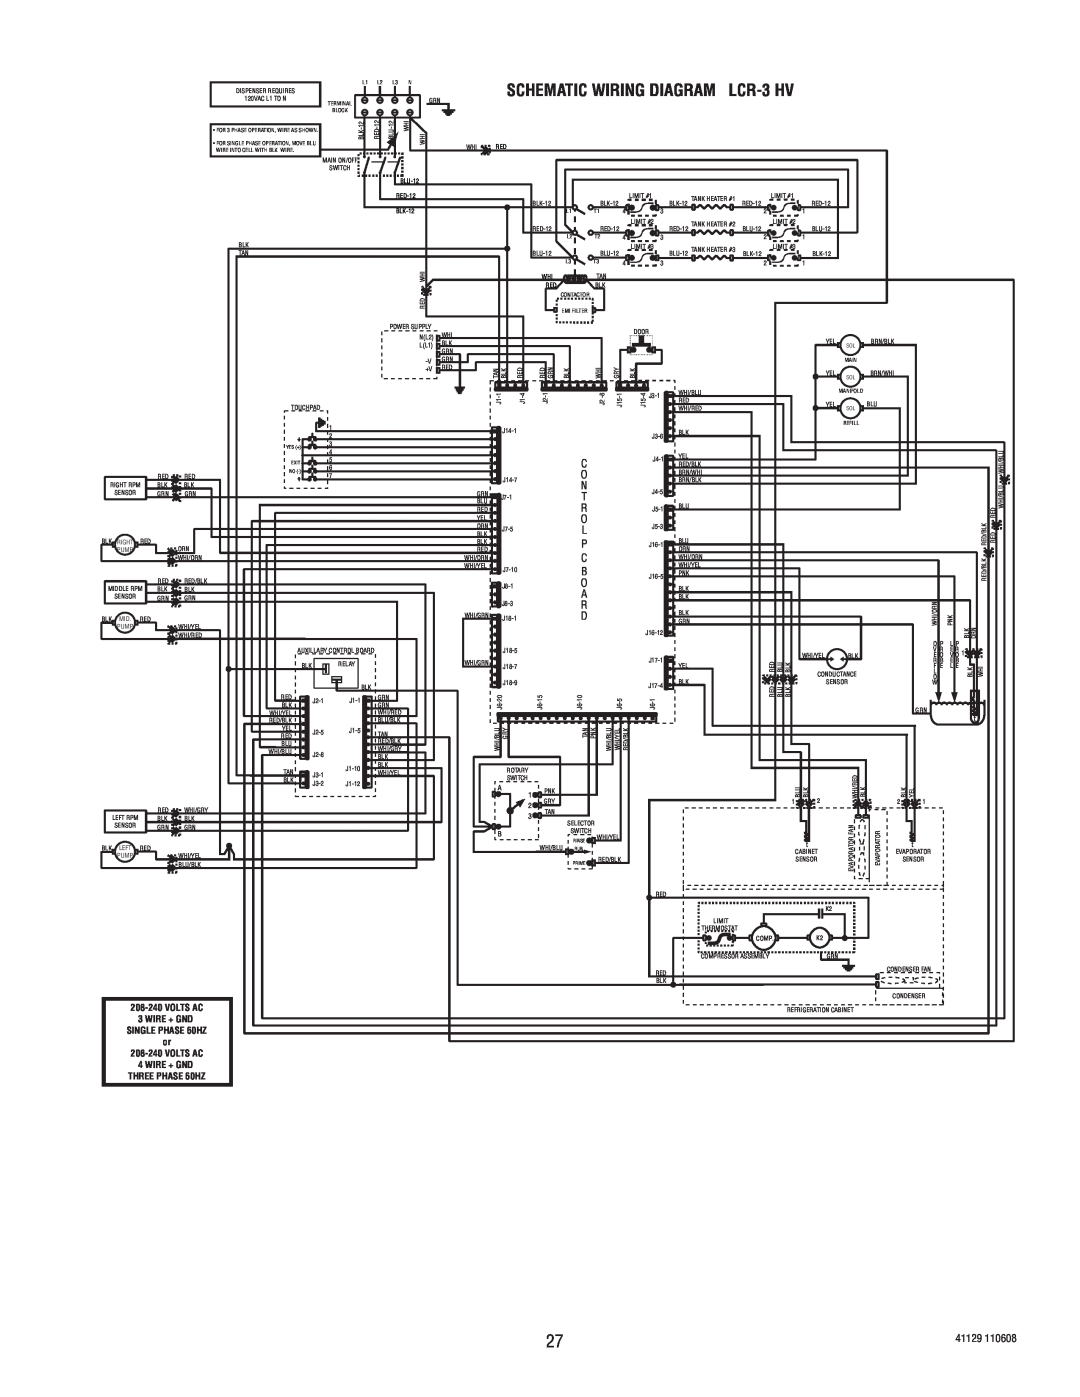 Bunn service manual Schematic Wiring Diagram, LCR-3HV 